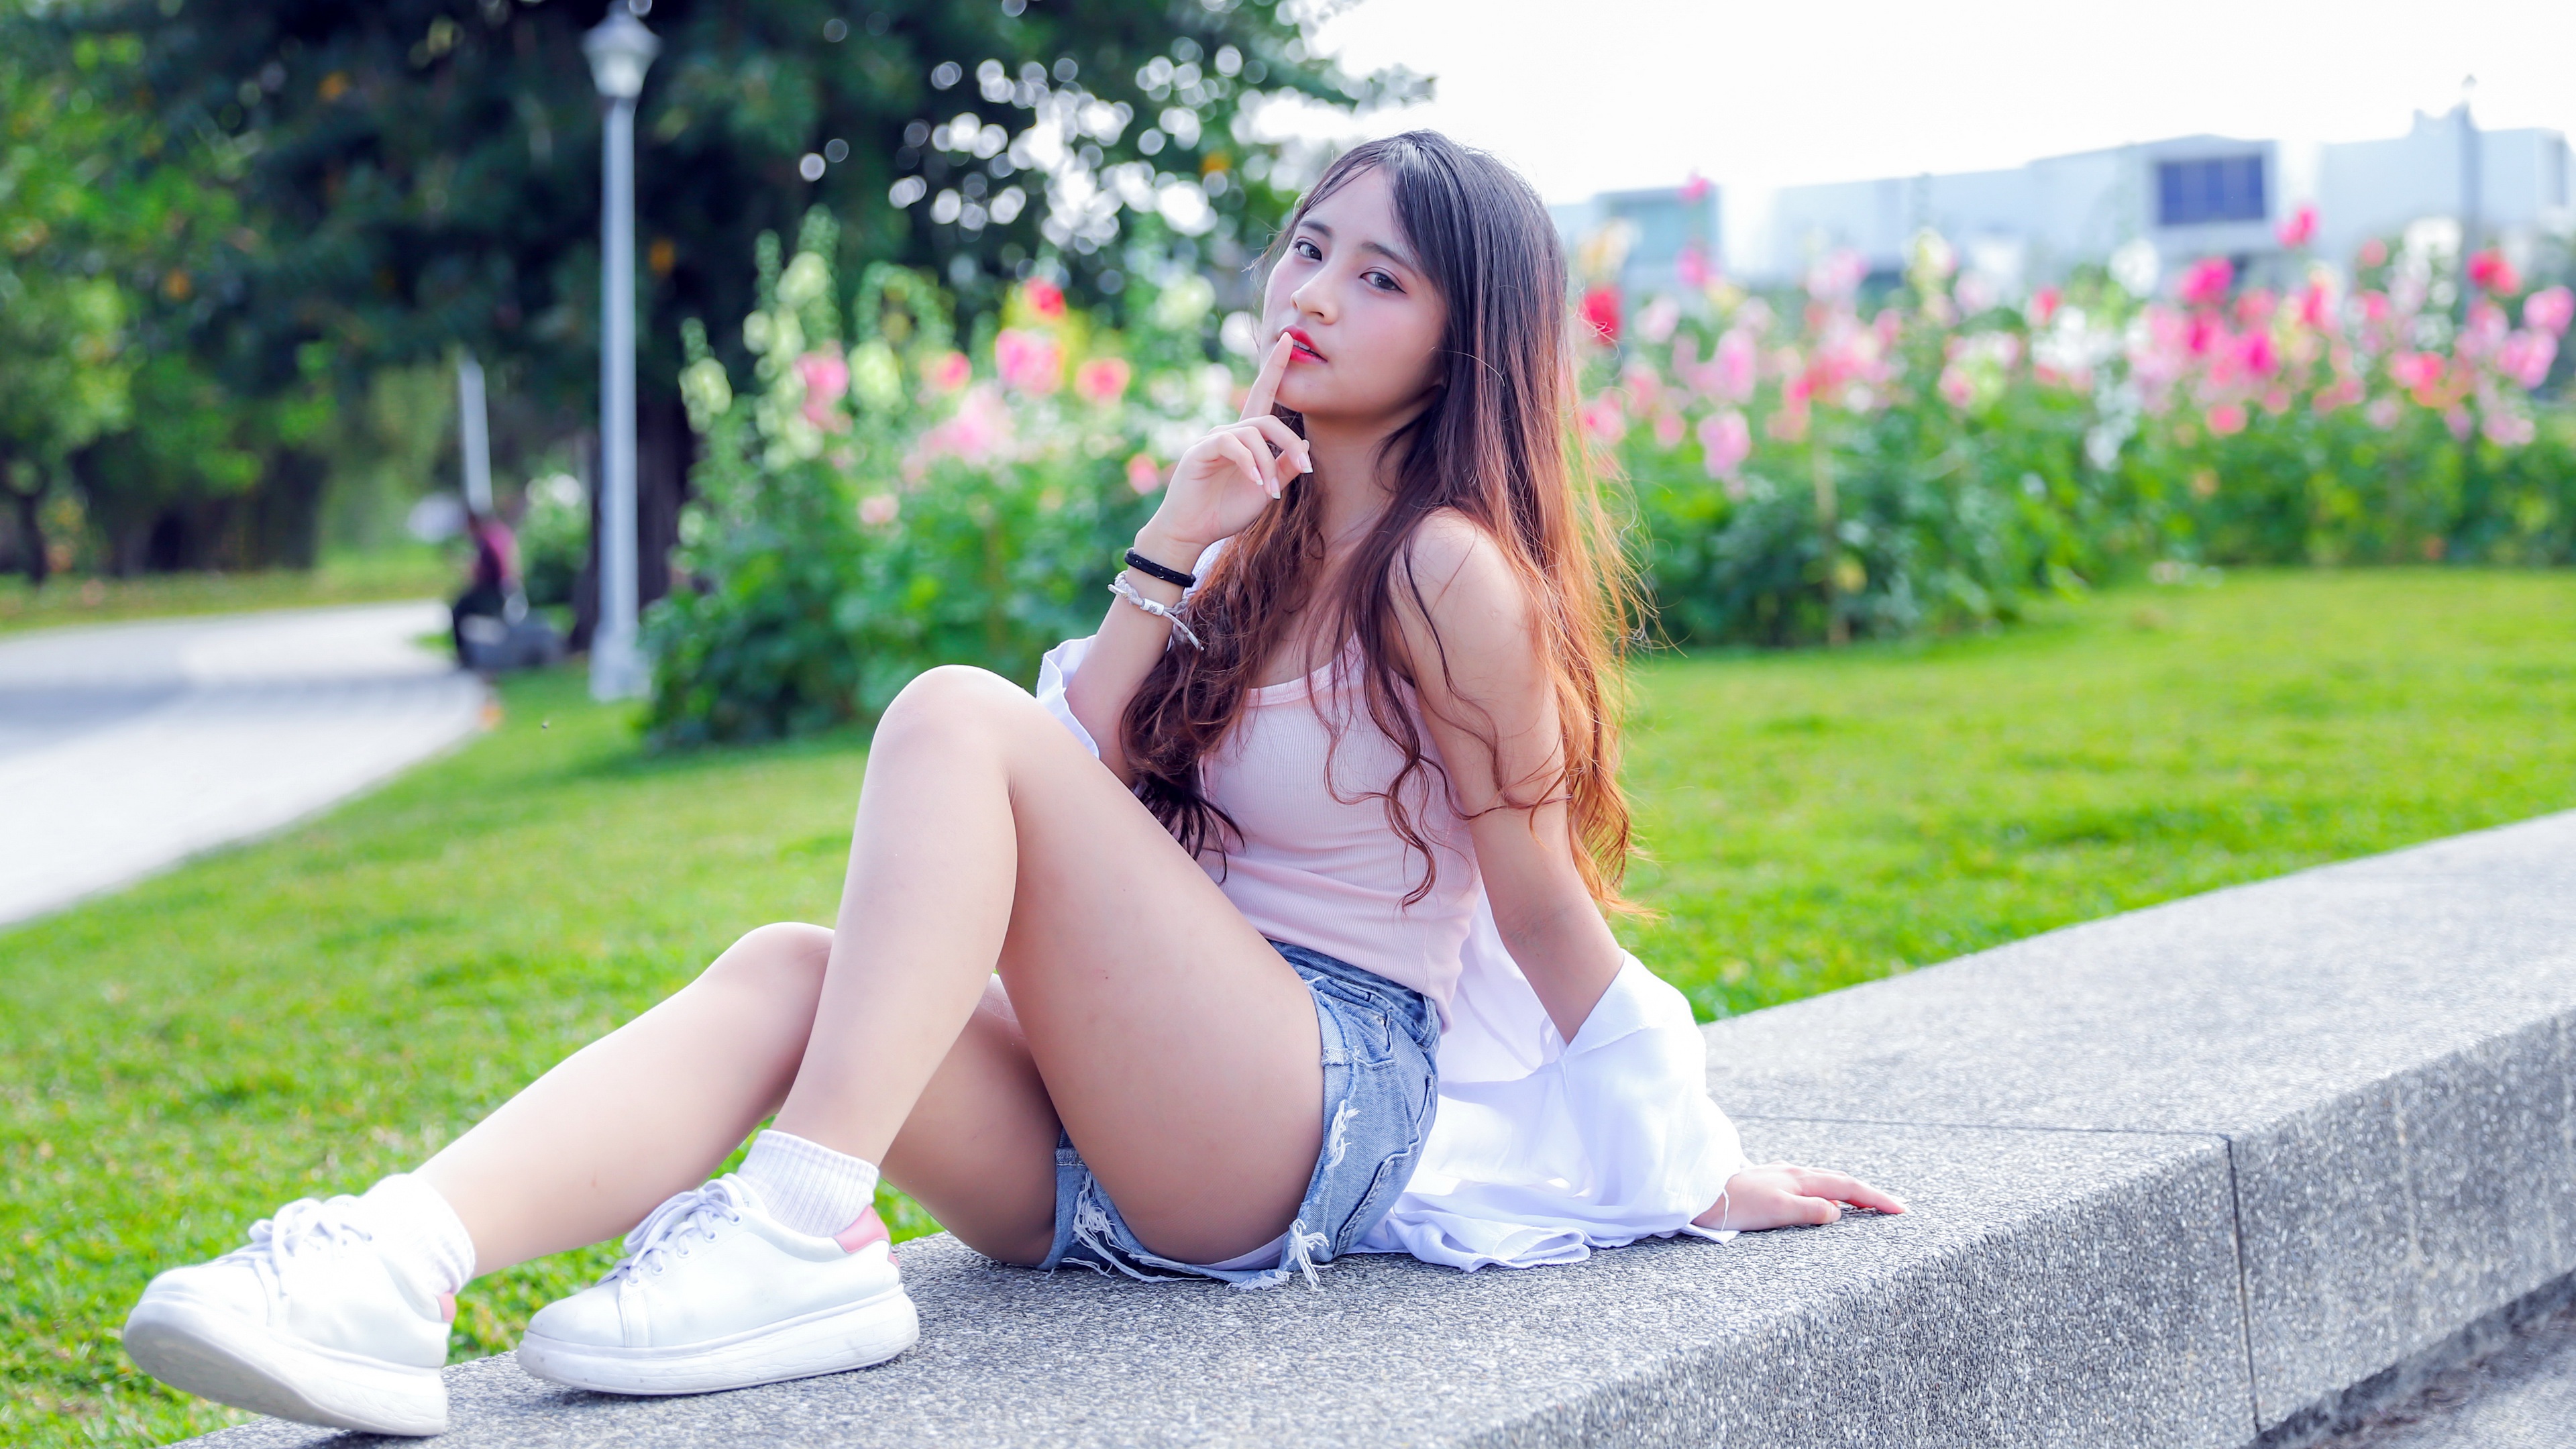 Women Asian Model Women Outdoors Brunette Long Hair Looking At Viewer Park Legs White Shoes Red Lips 3840x2160